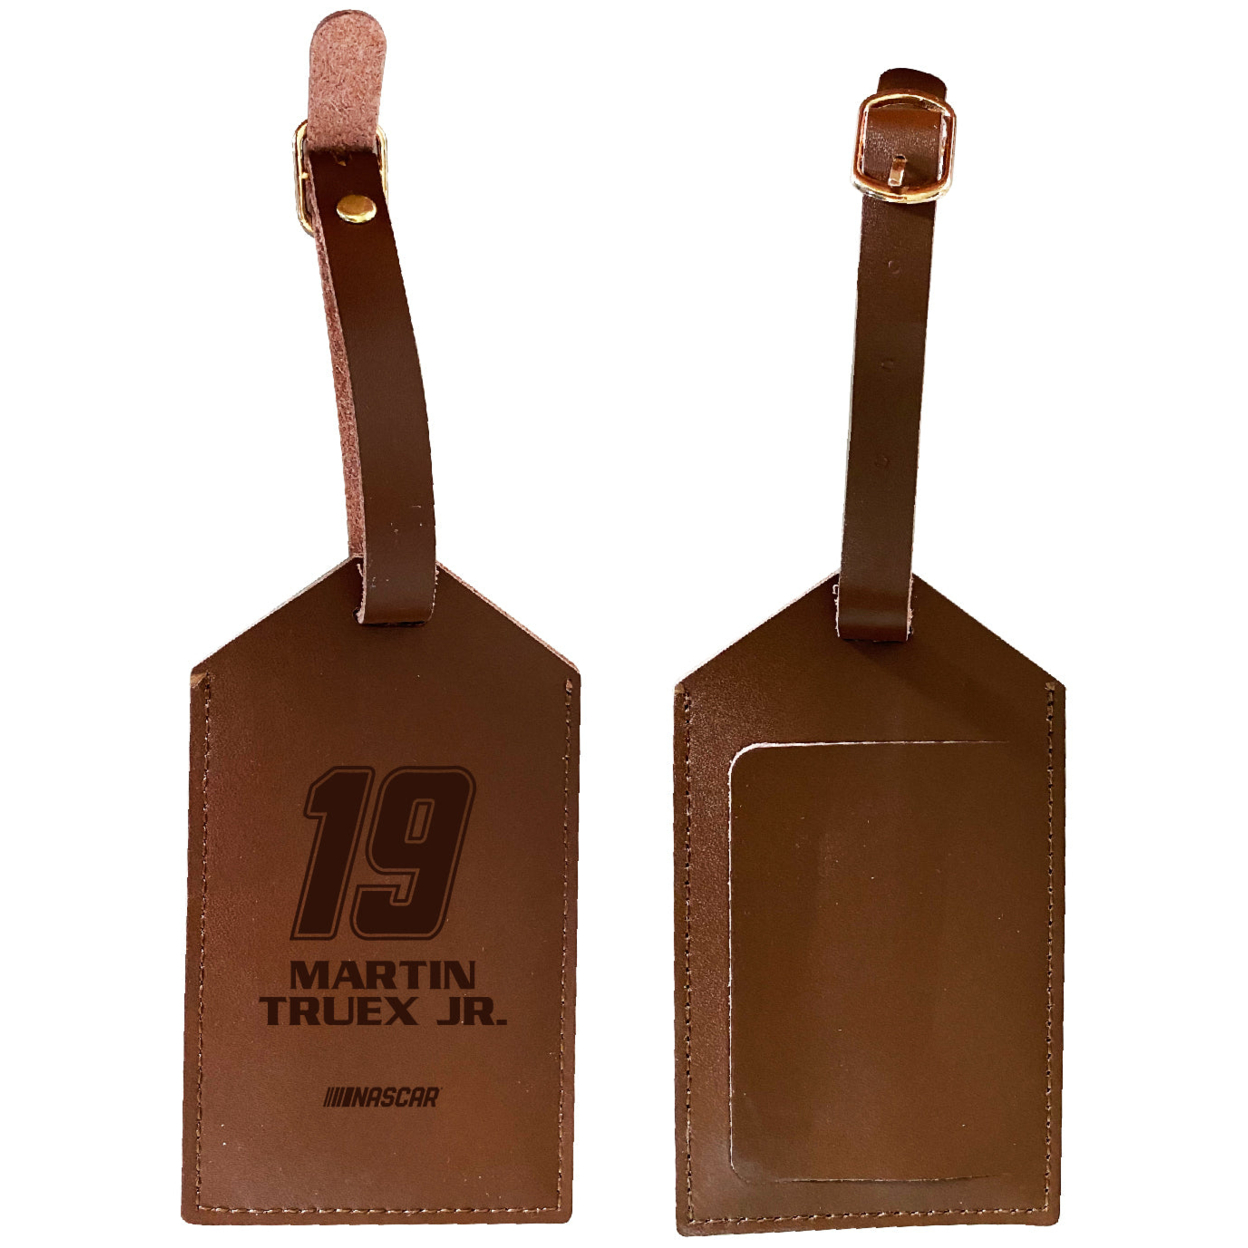 Nascar #19 Martin Truex Jr. Leather Luggage Tag Engraved